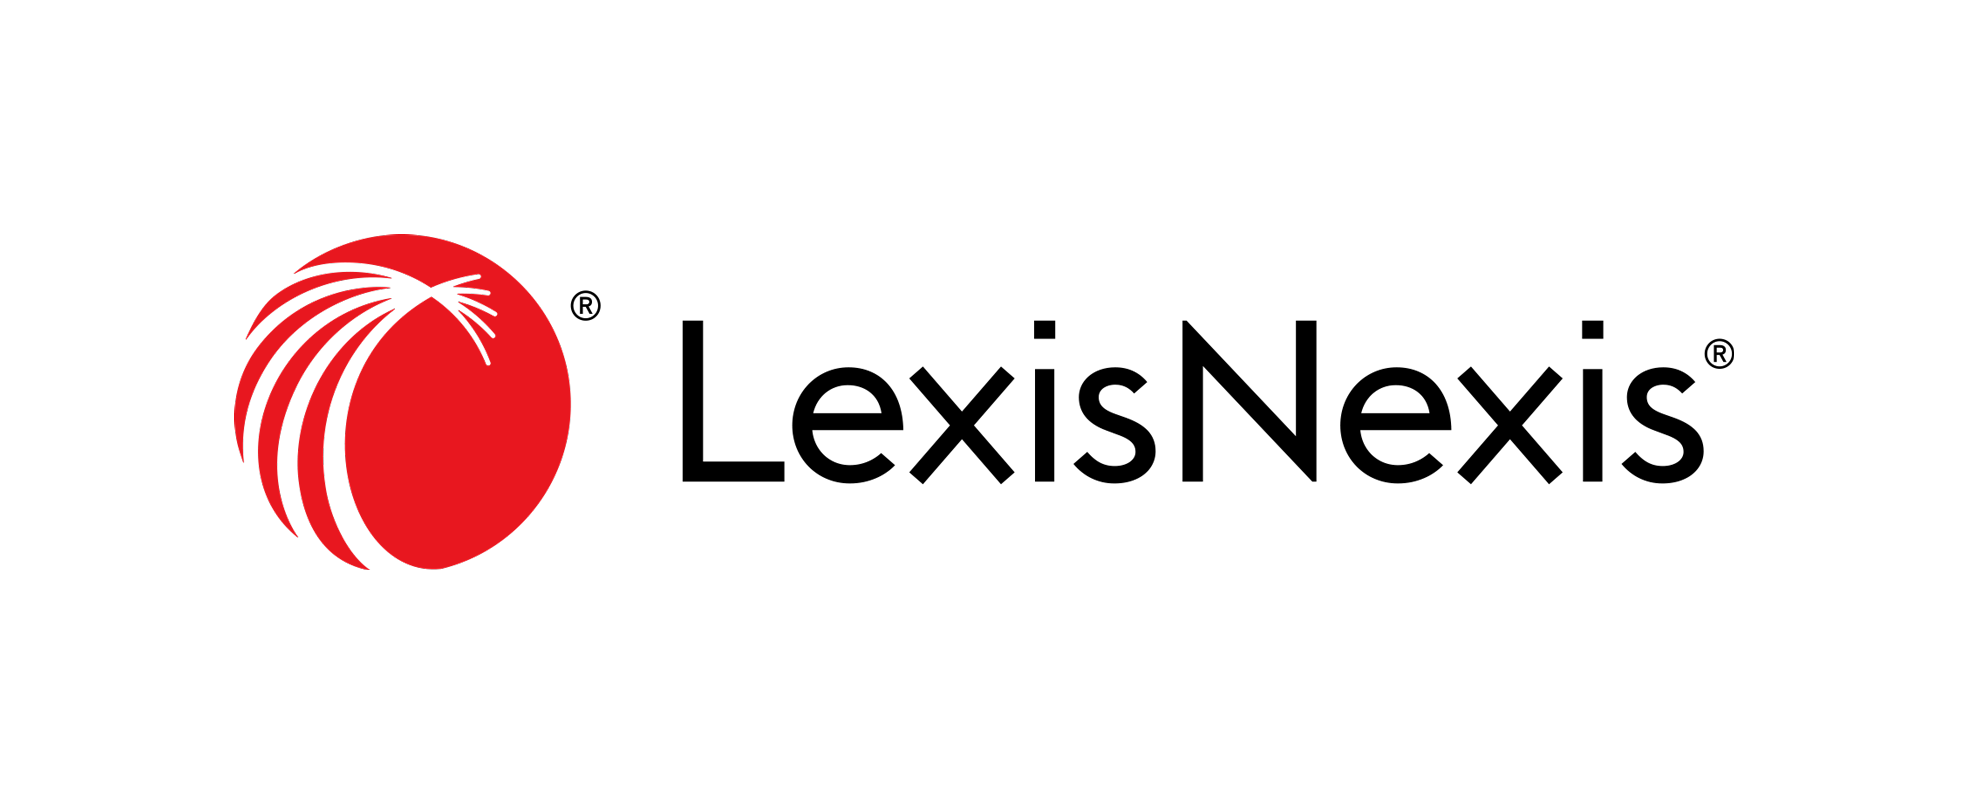 LexisNexis logo with transparent background